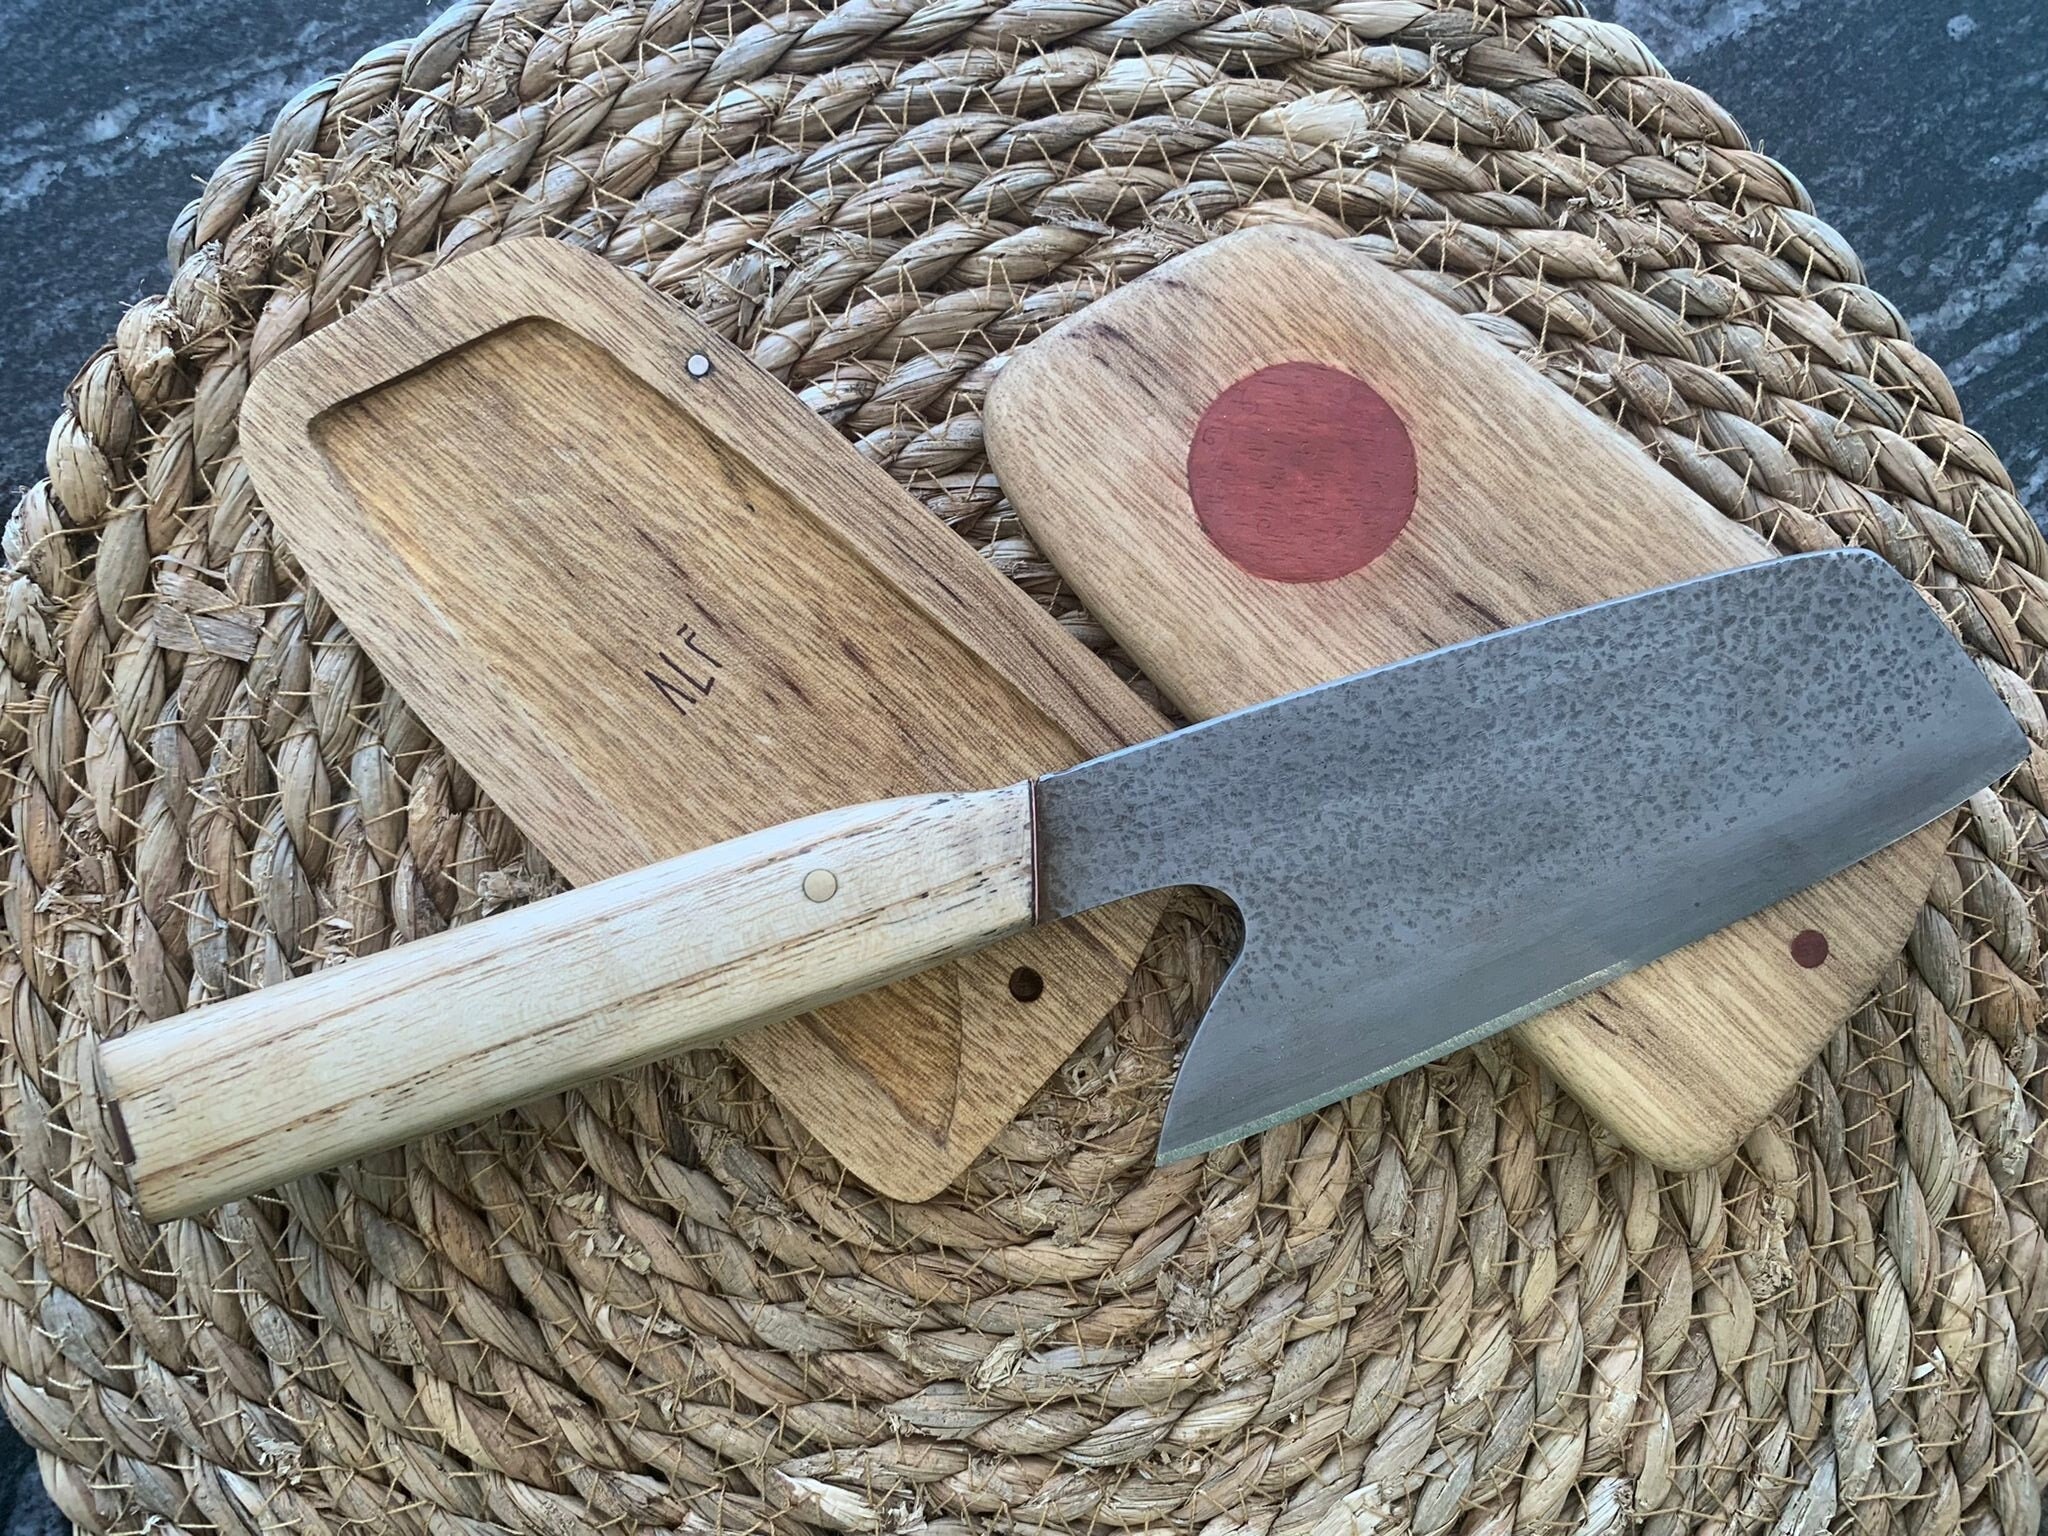 Handmade Japanese Nakiri Knife Razor Sharp Cutting - Jayger